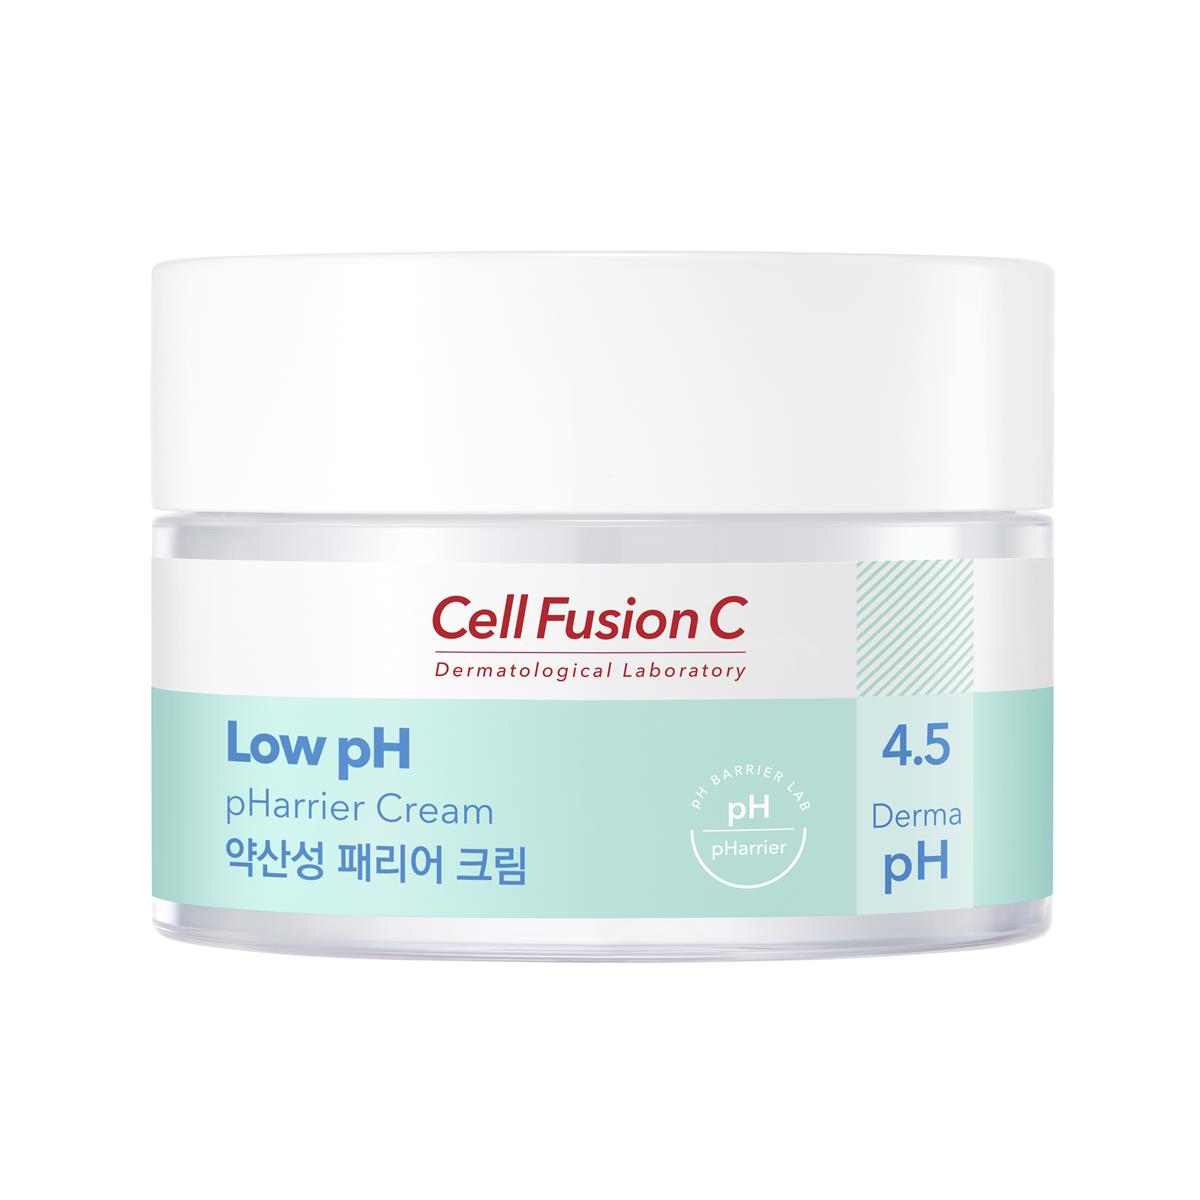 Cell Fusion Low pH Pharrier Cream 55 ml